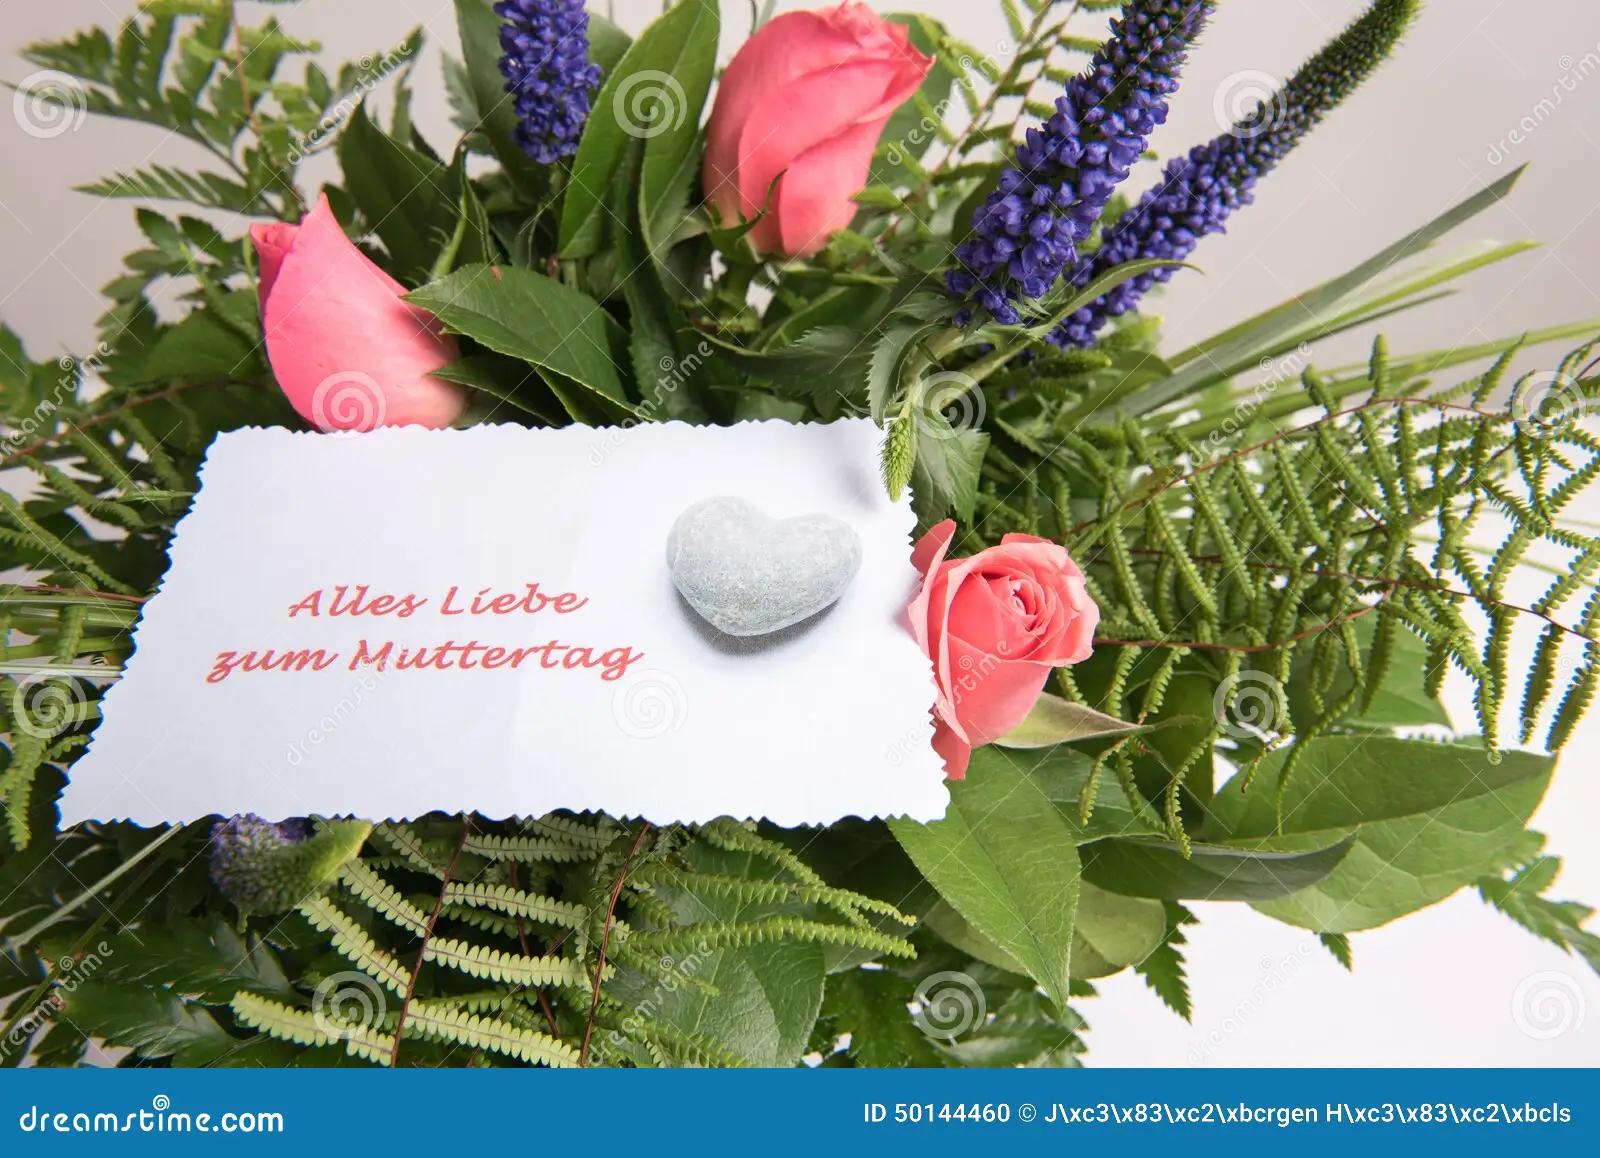 fiori in tedesco - Come si dice in tedesco Beatrice